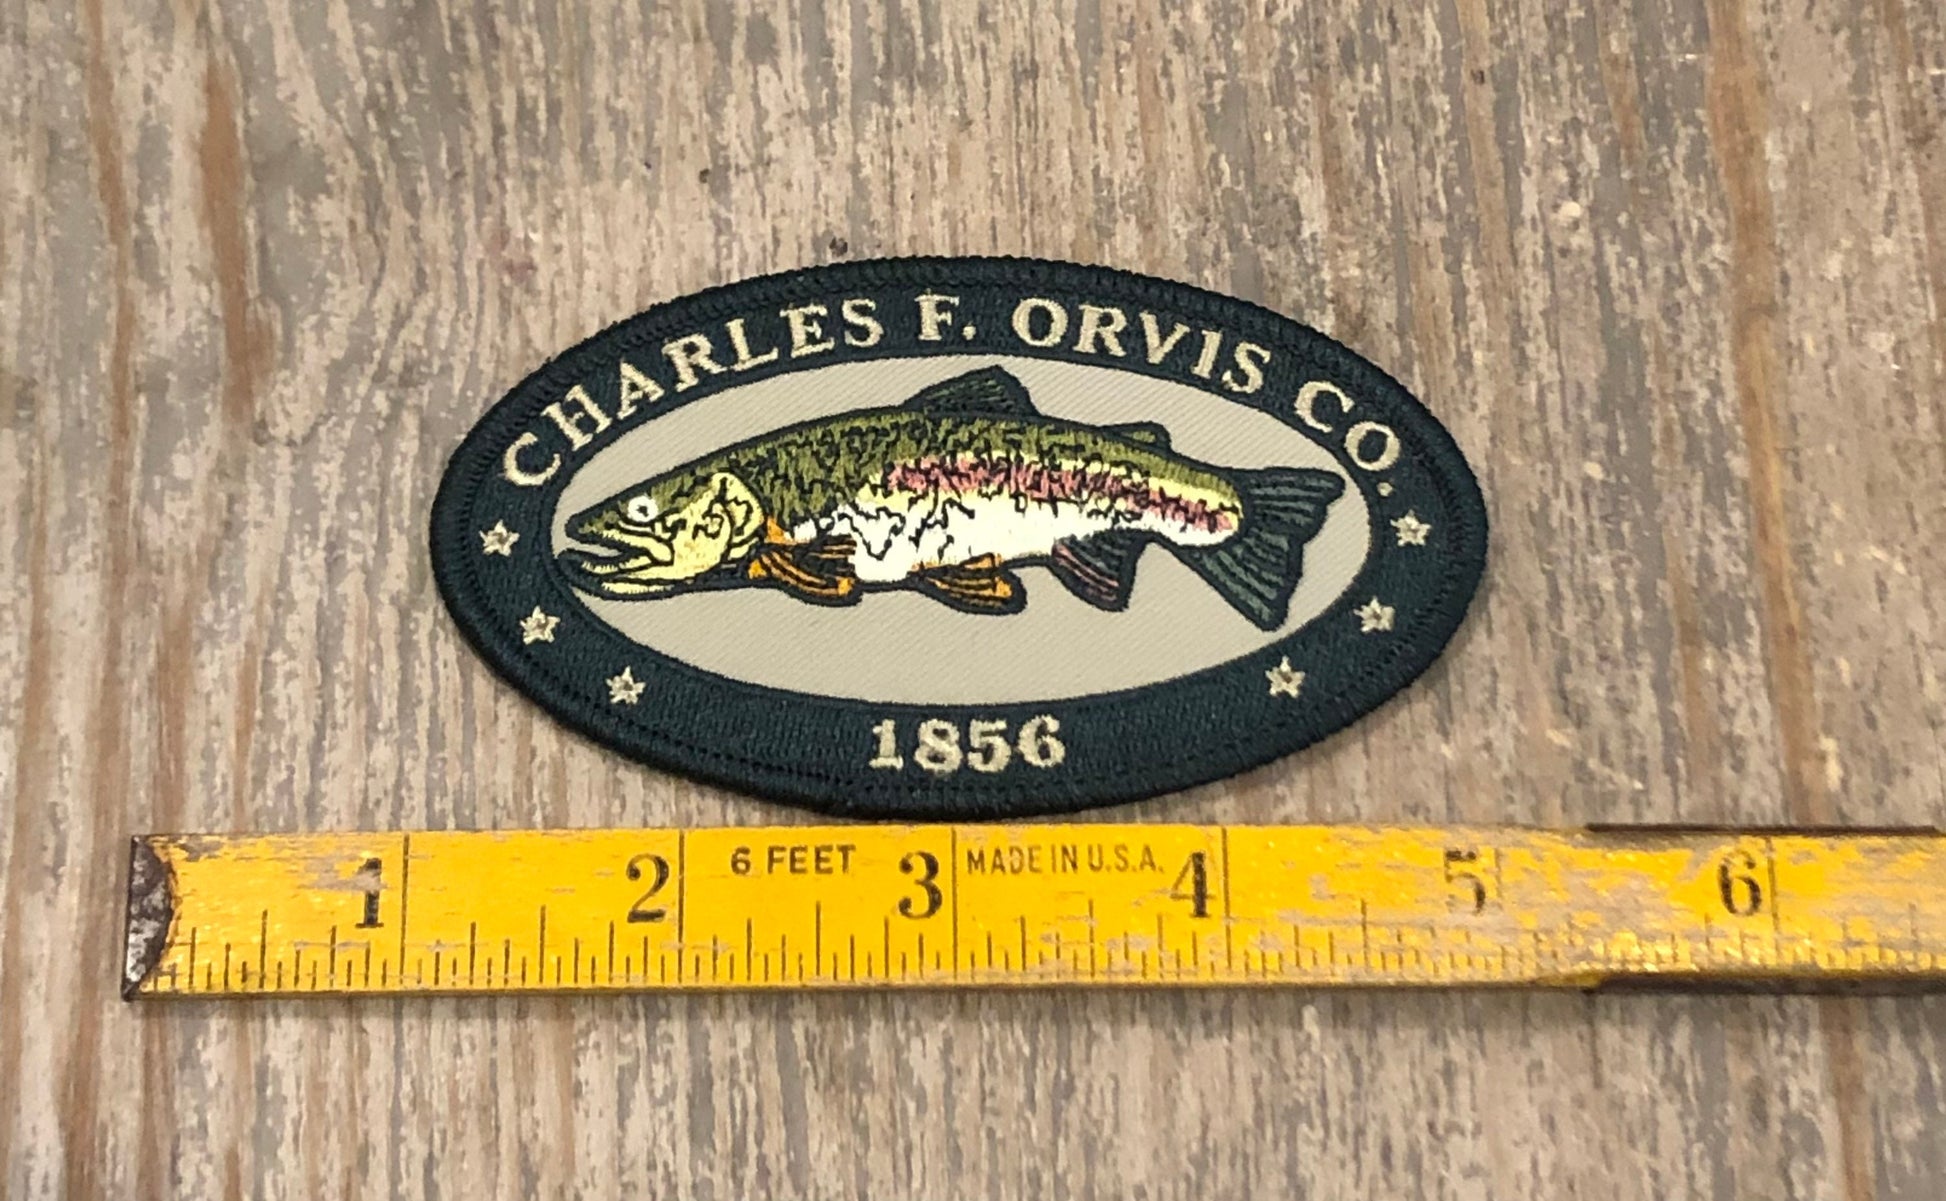 Charles F. Orvis – Adirondack Retro